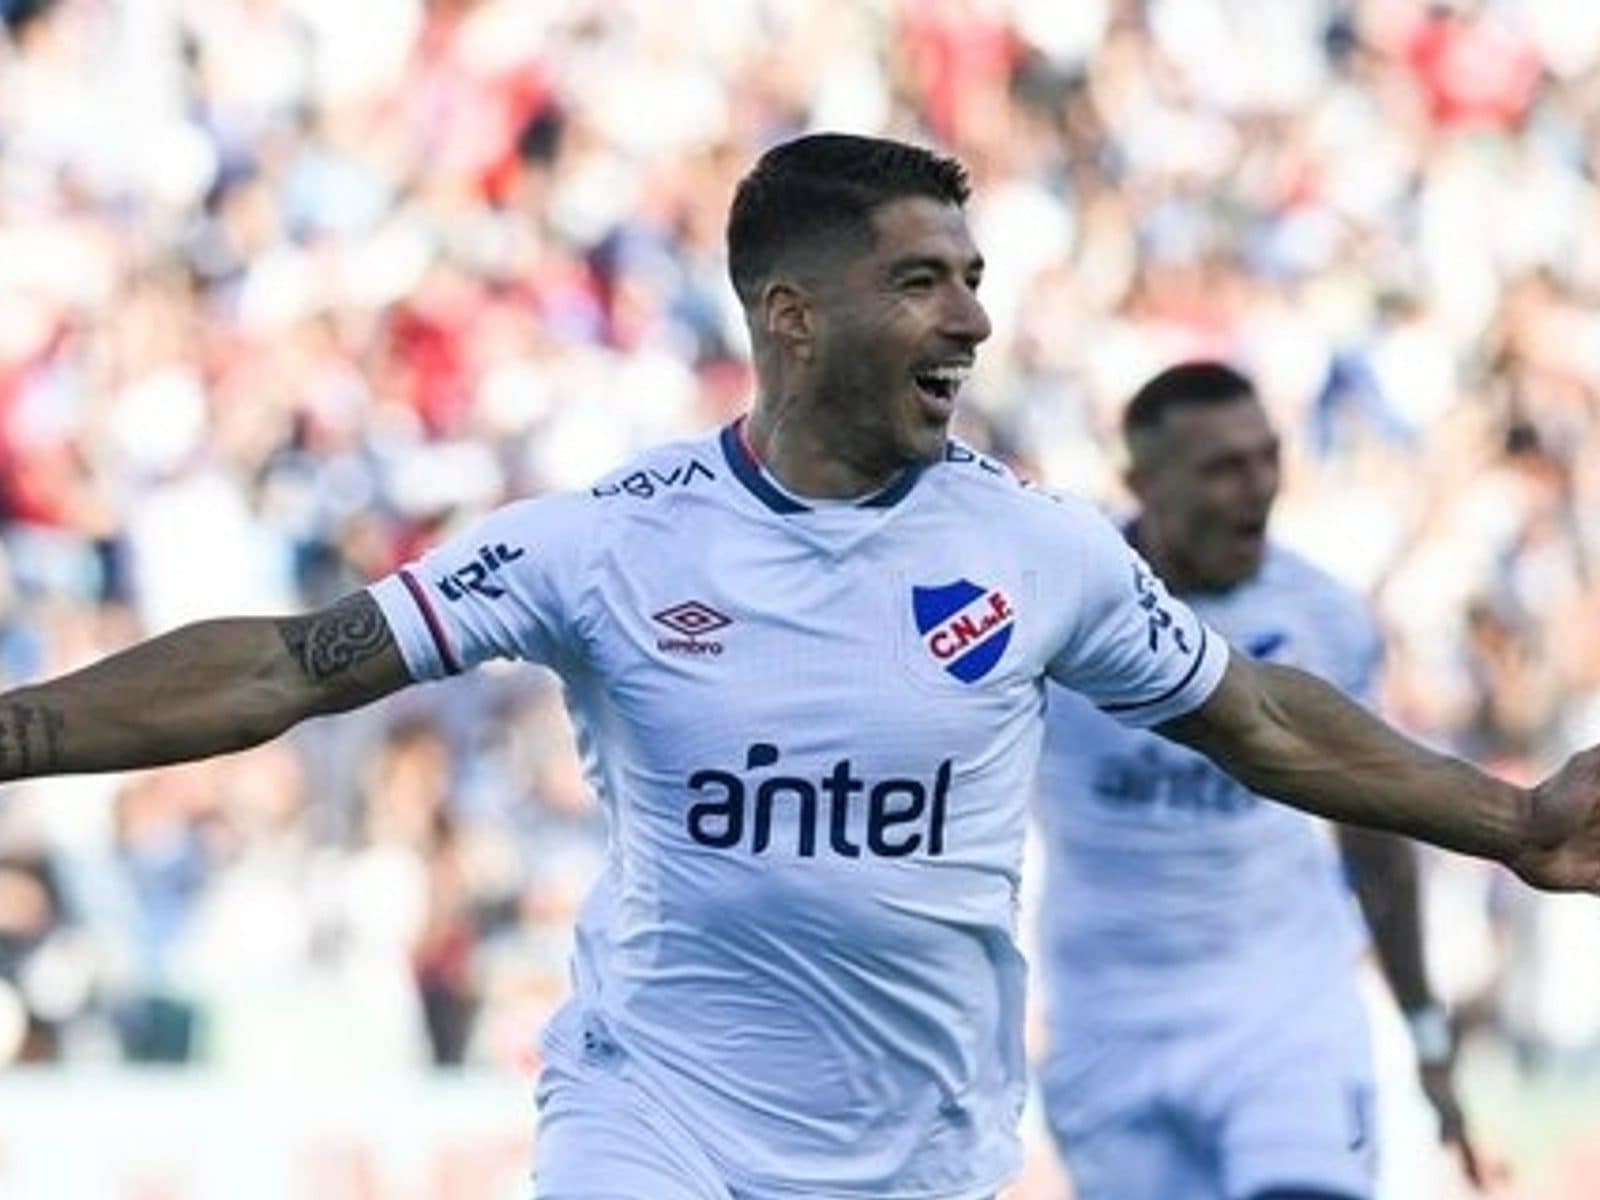 Comparisonator - Bests of Uruguayan Primera División in 5